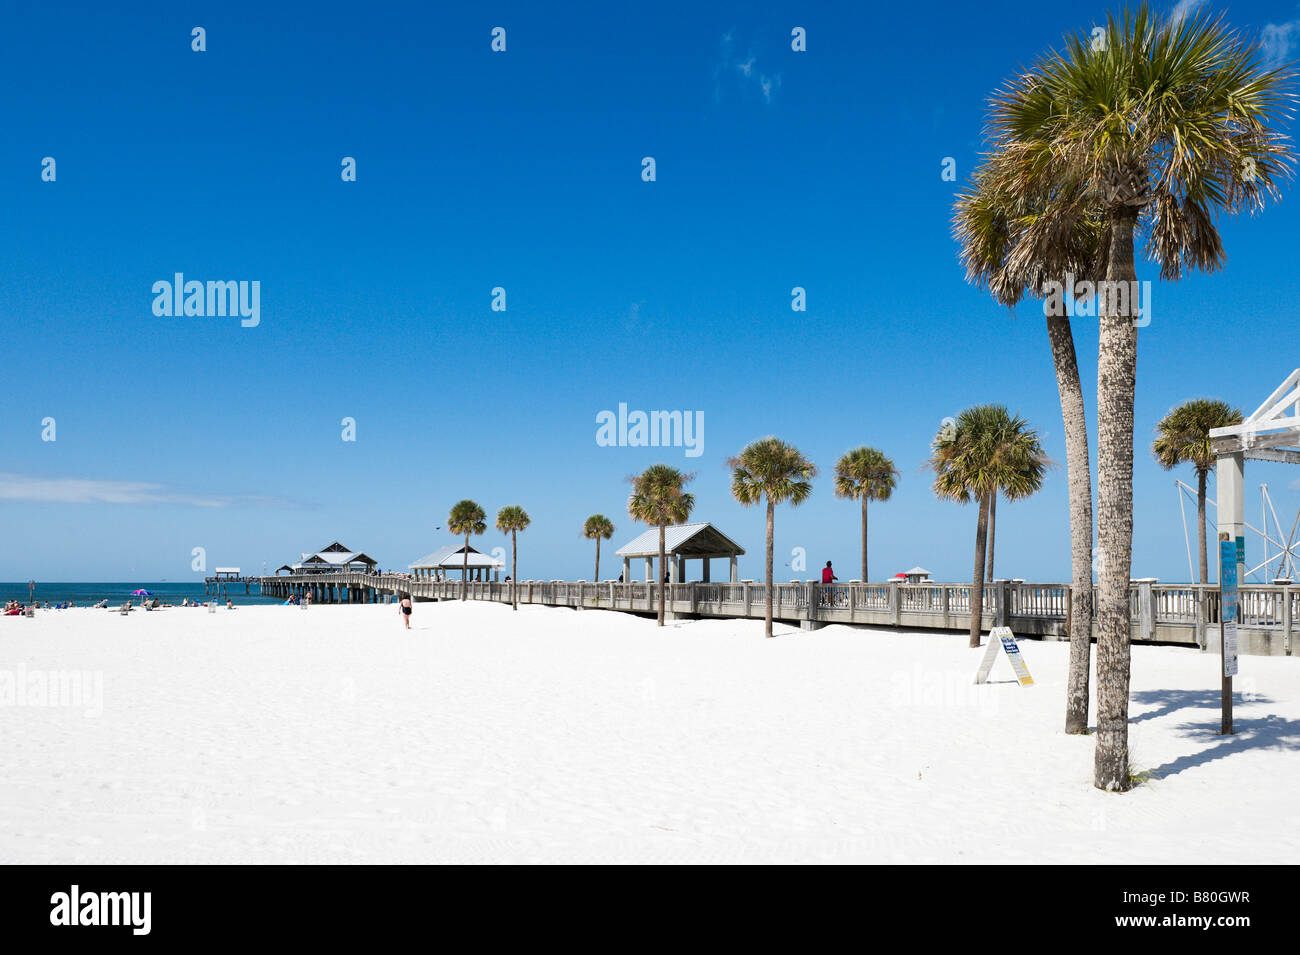 Pier at Clearwater Beach, Gulf Coast, Florida, USA Stock Photo